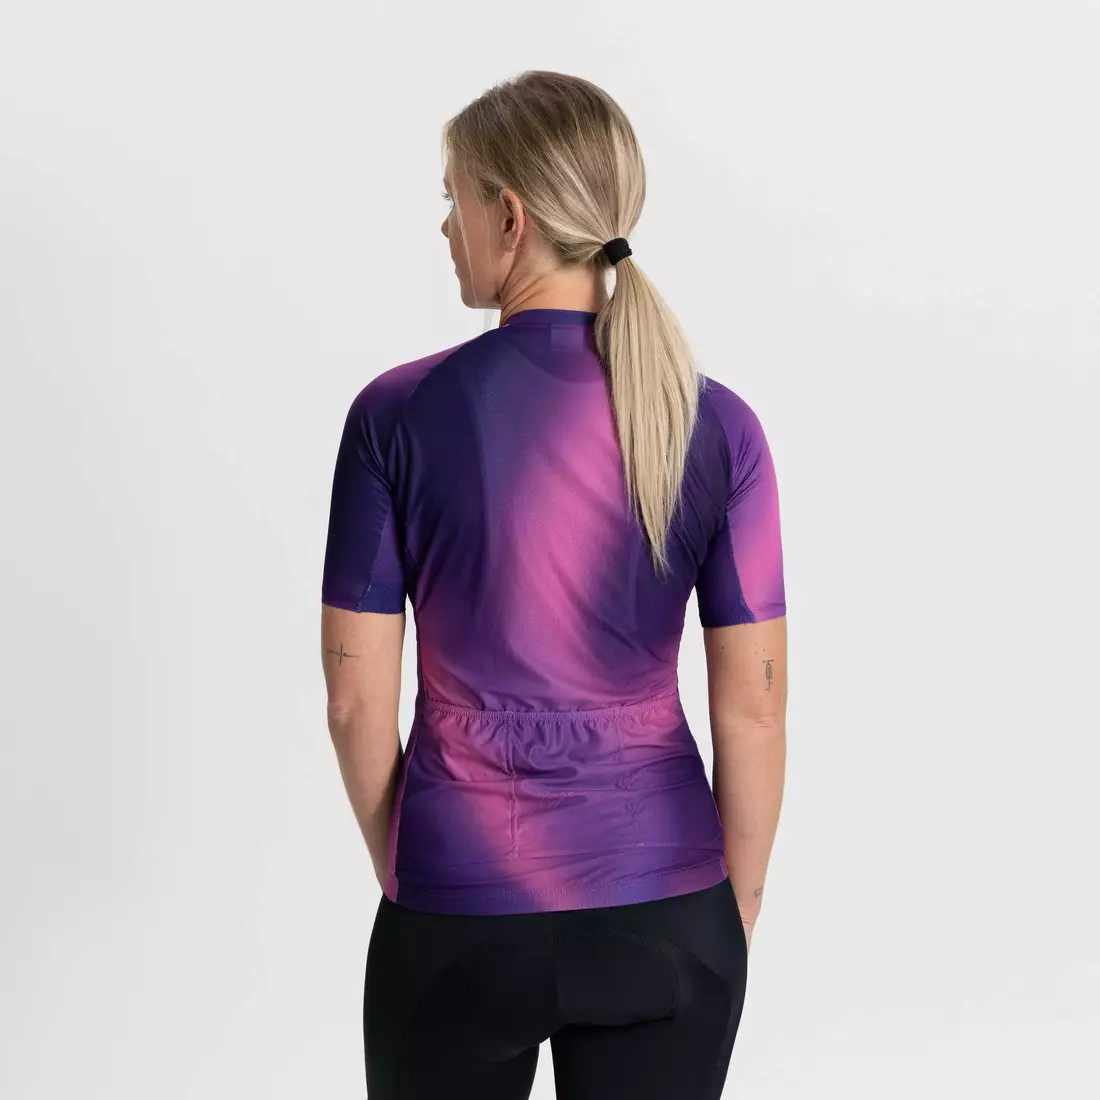 Rogelli women's cycling jersey AURORA purple-pink